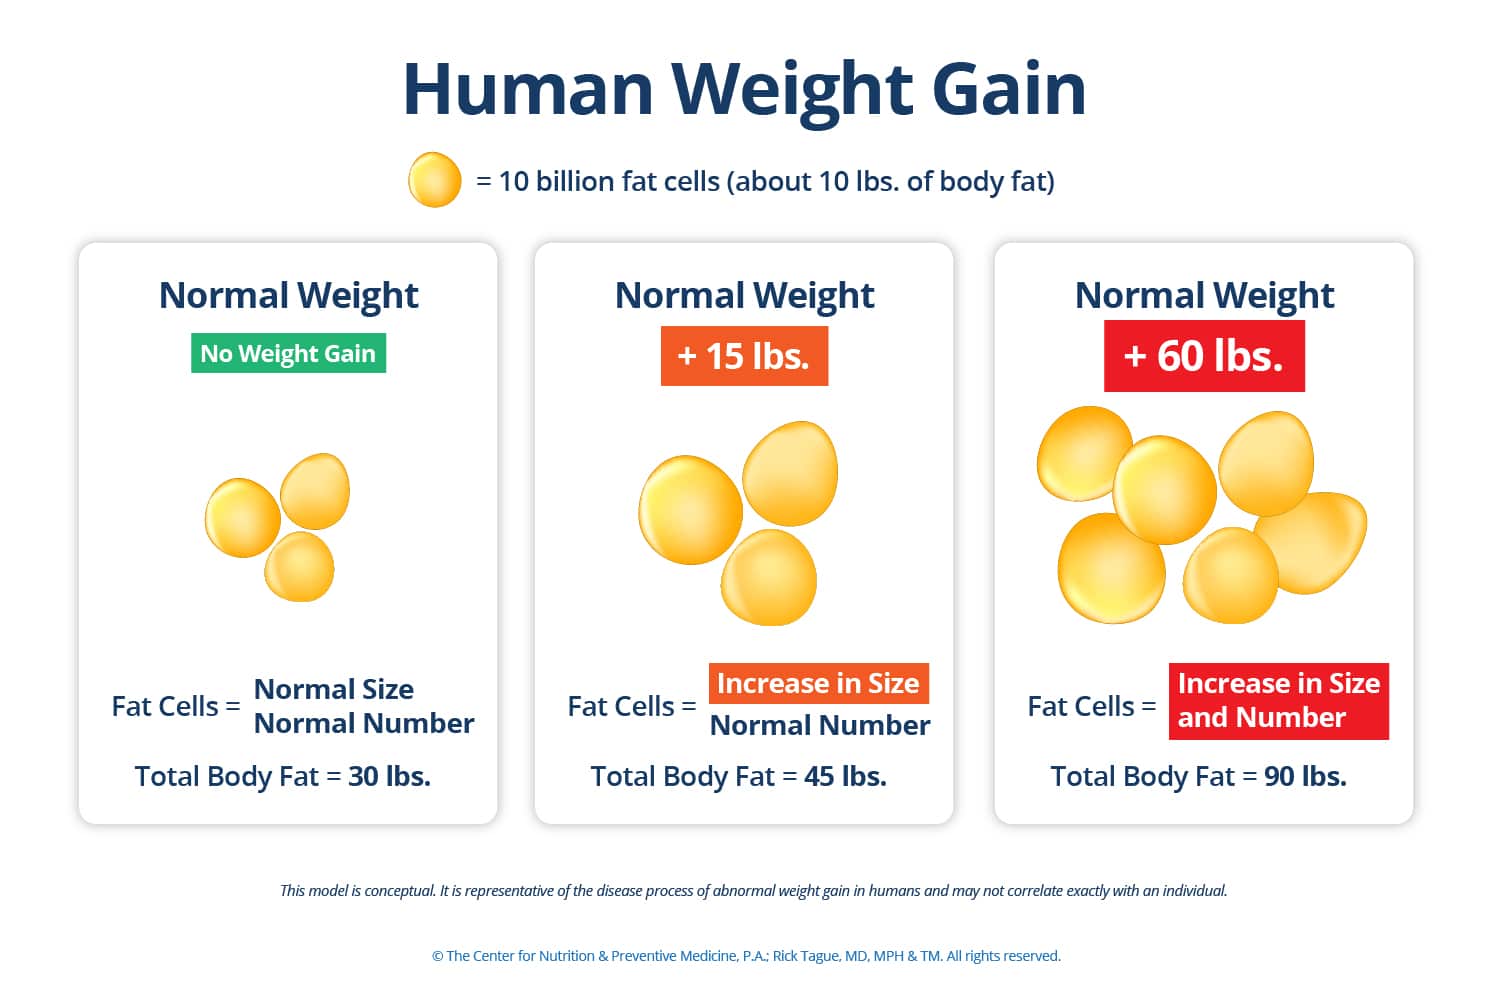 Human Weight Gain Illustration